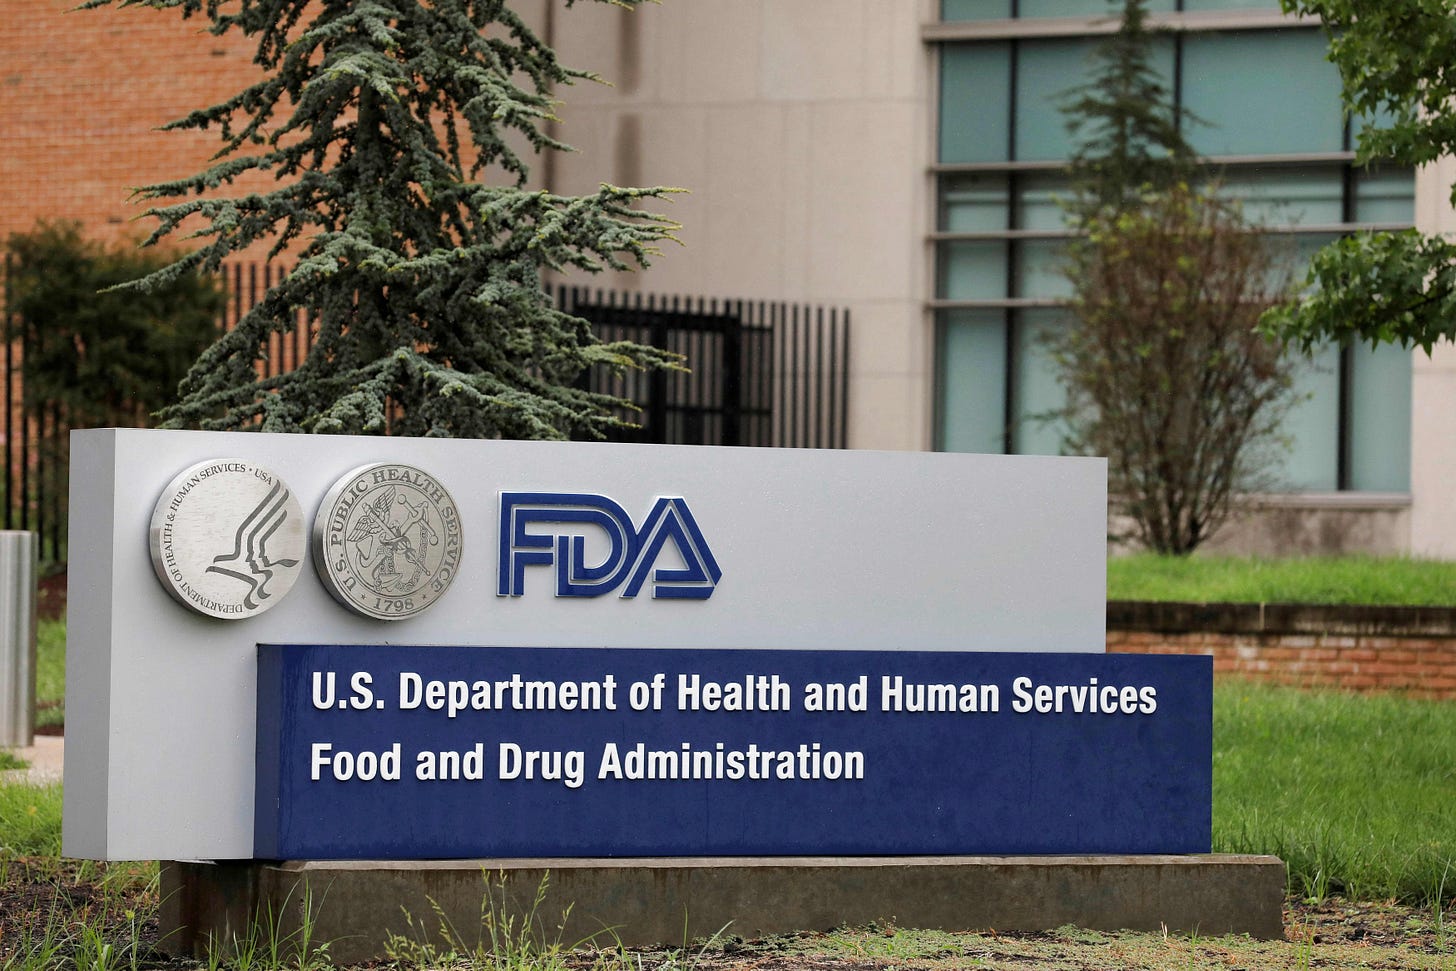 FDA News